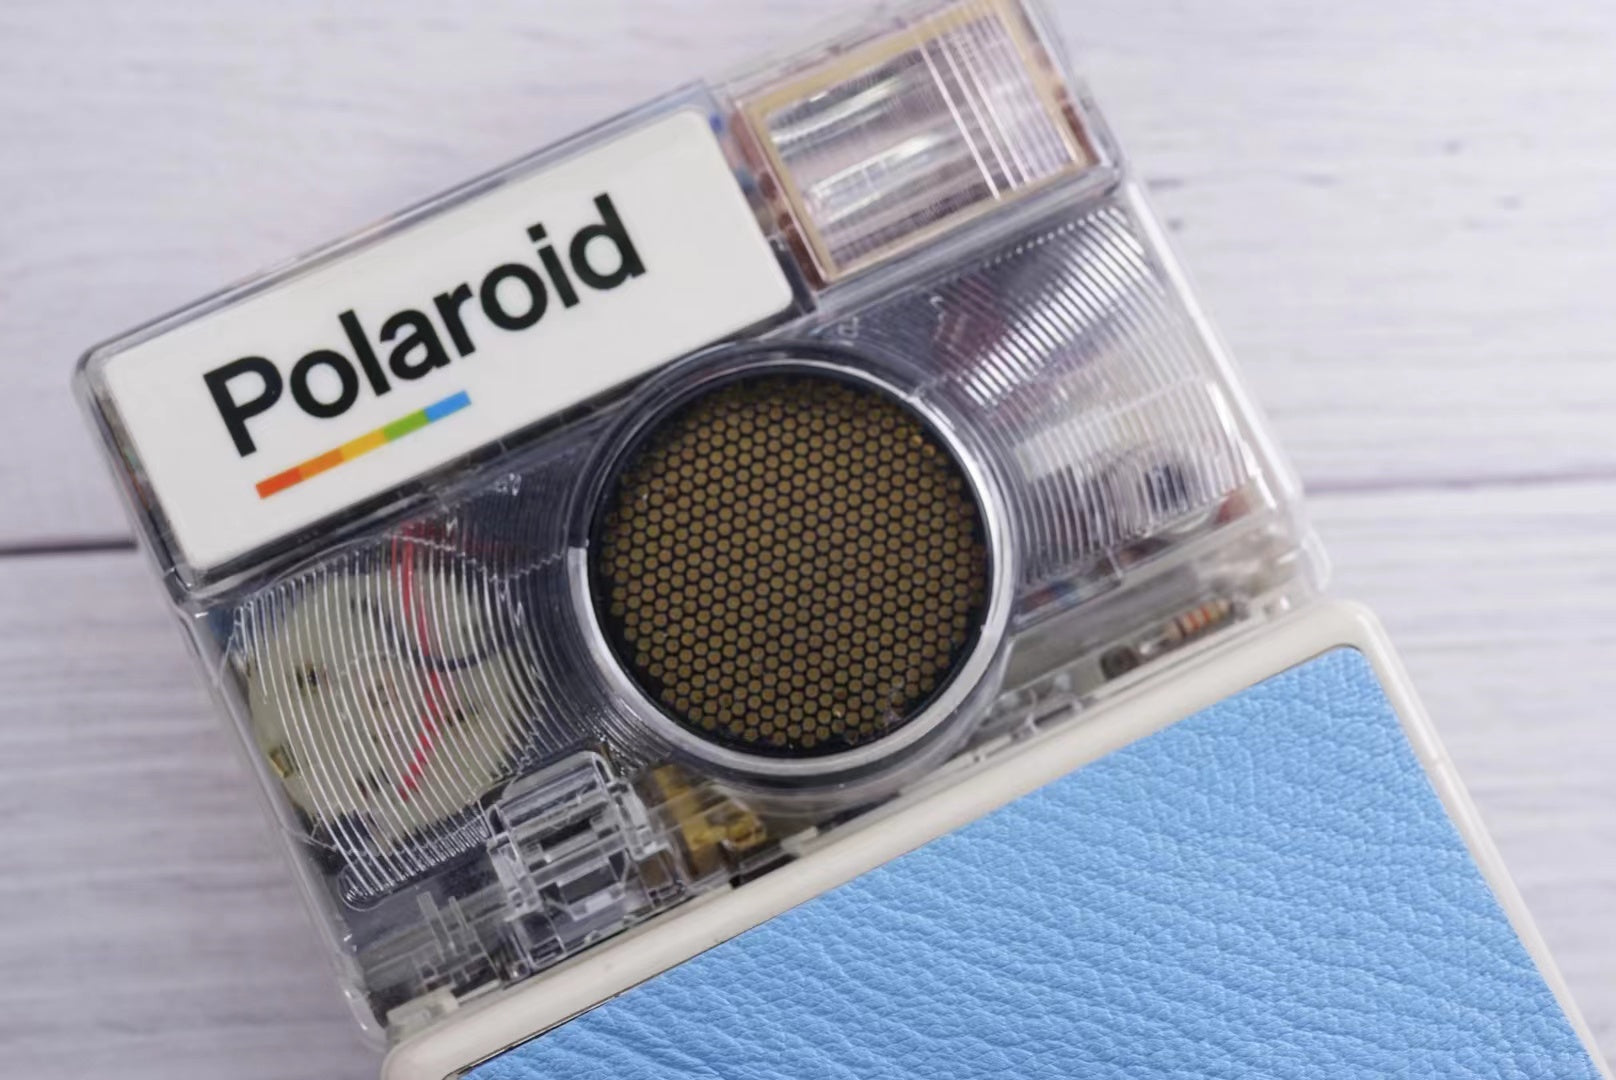 Polaroid SLR 680 White Body transparent Blue shutter button 